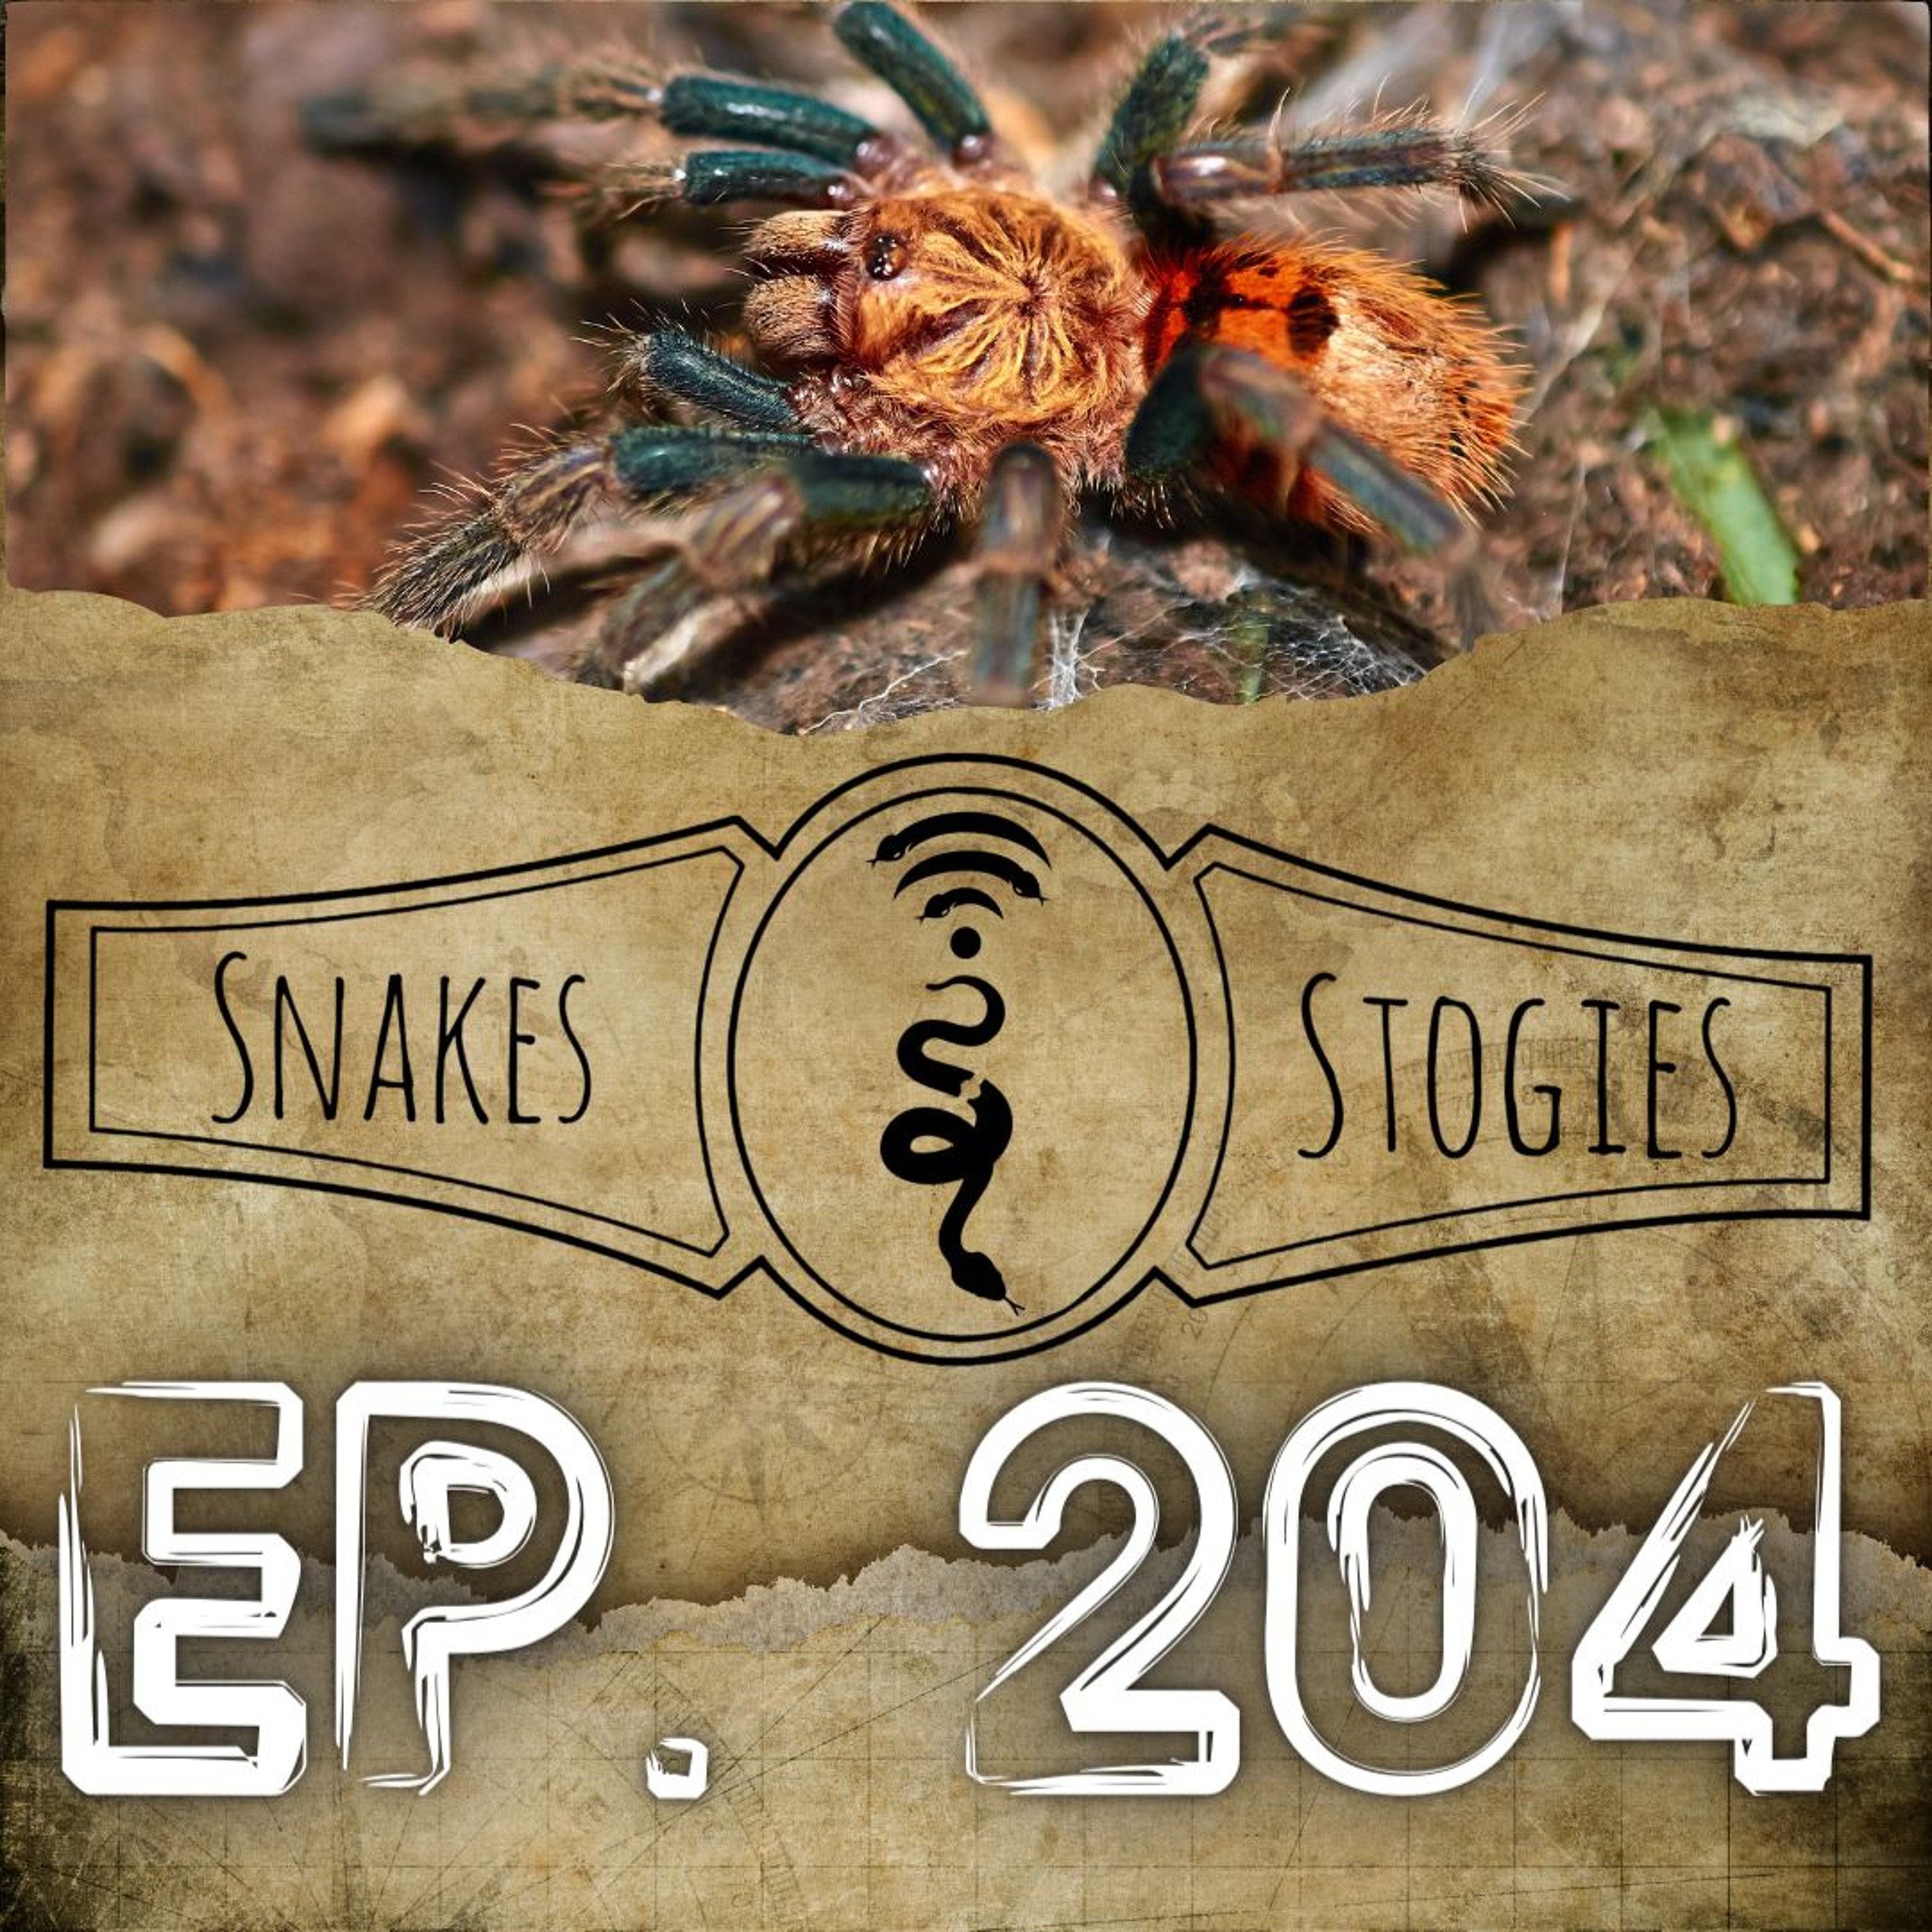 Tarantulas with Nisarg Shah | Snakes & Stogies Ep. 204